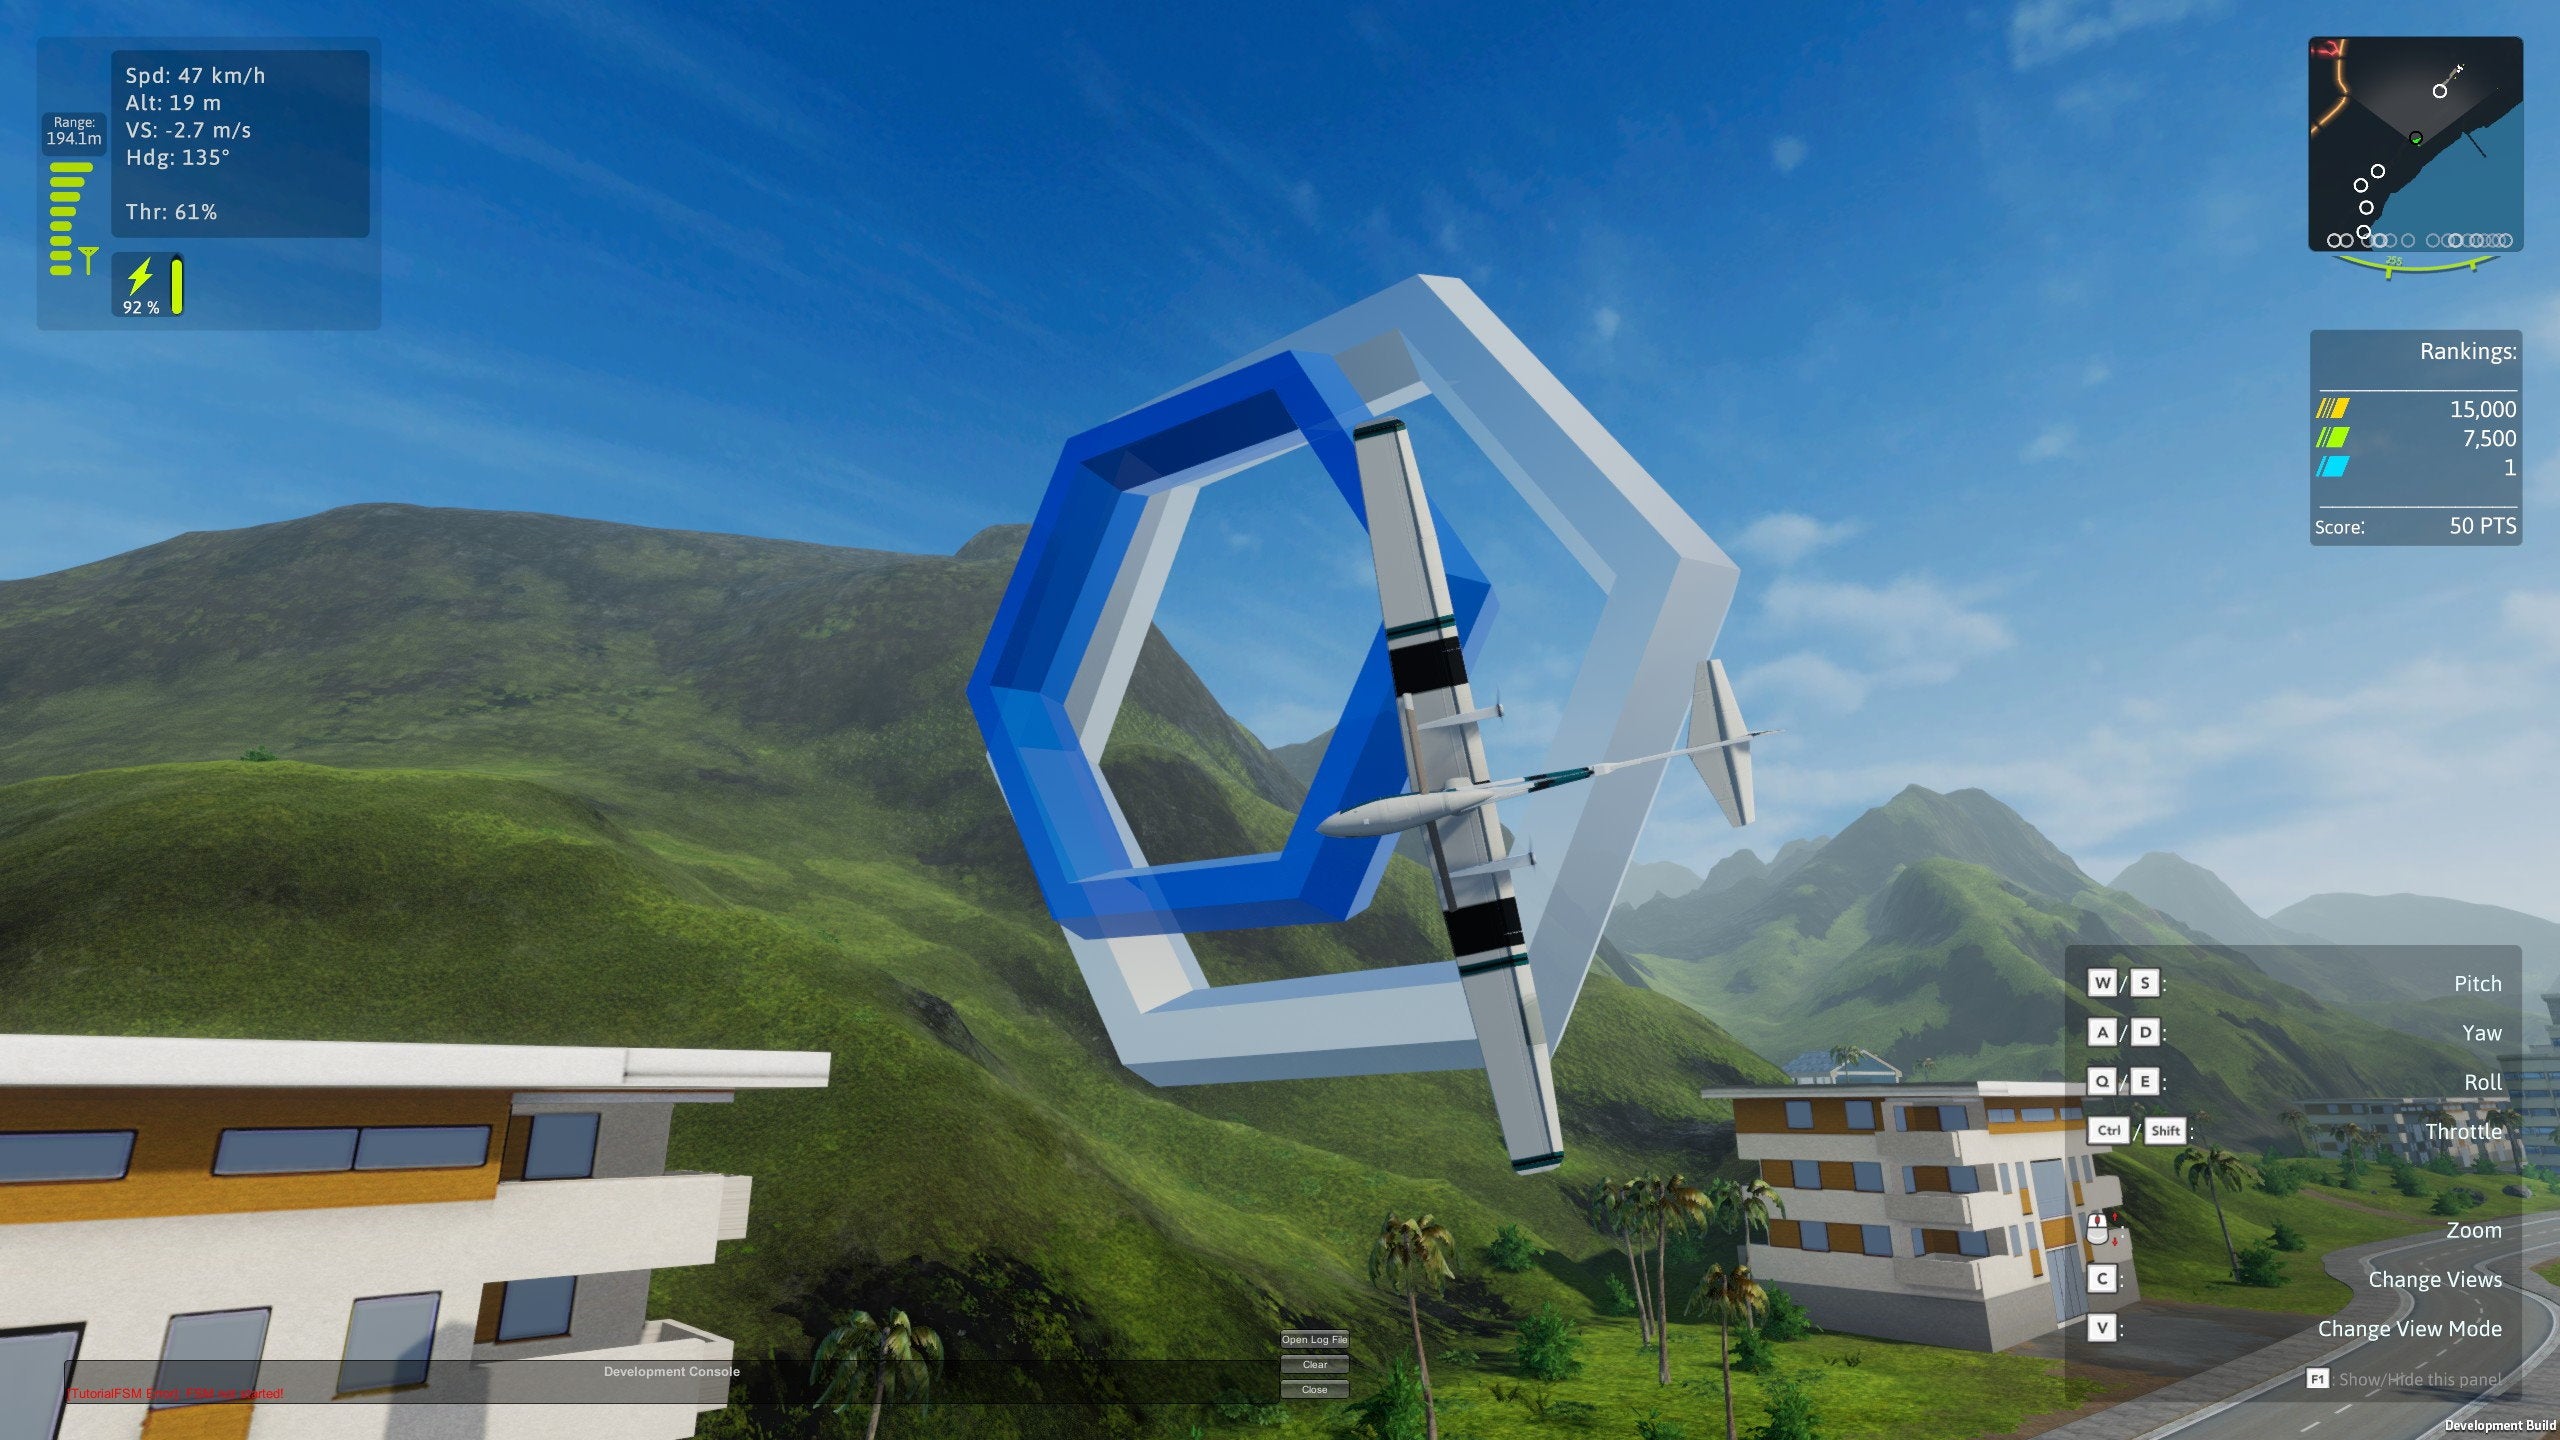 A model plane flies through grassy hills with a hexagonal goal in the sky in Balsa Model Flight Simulator